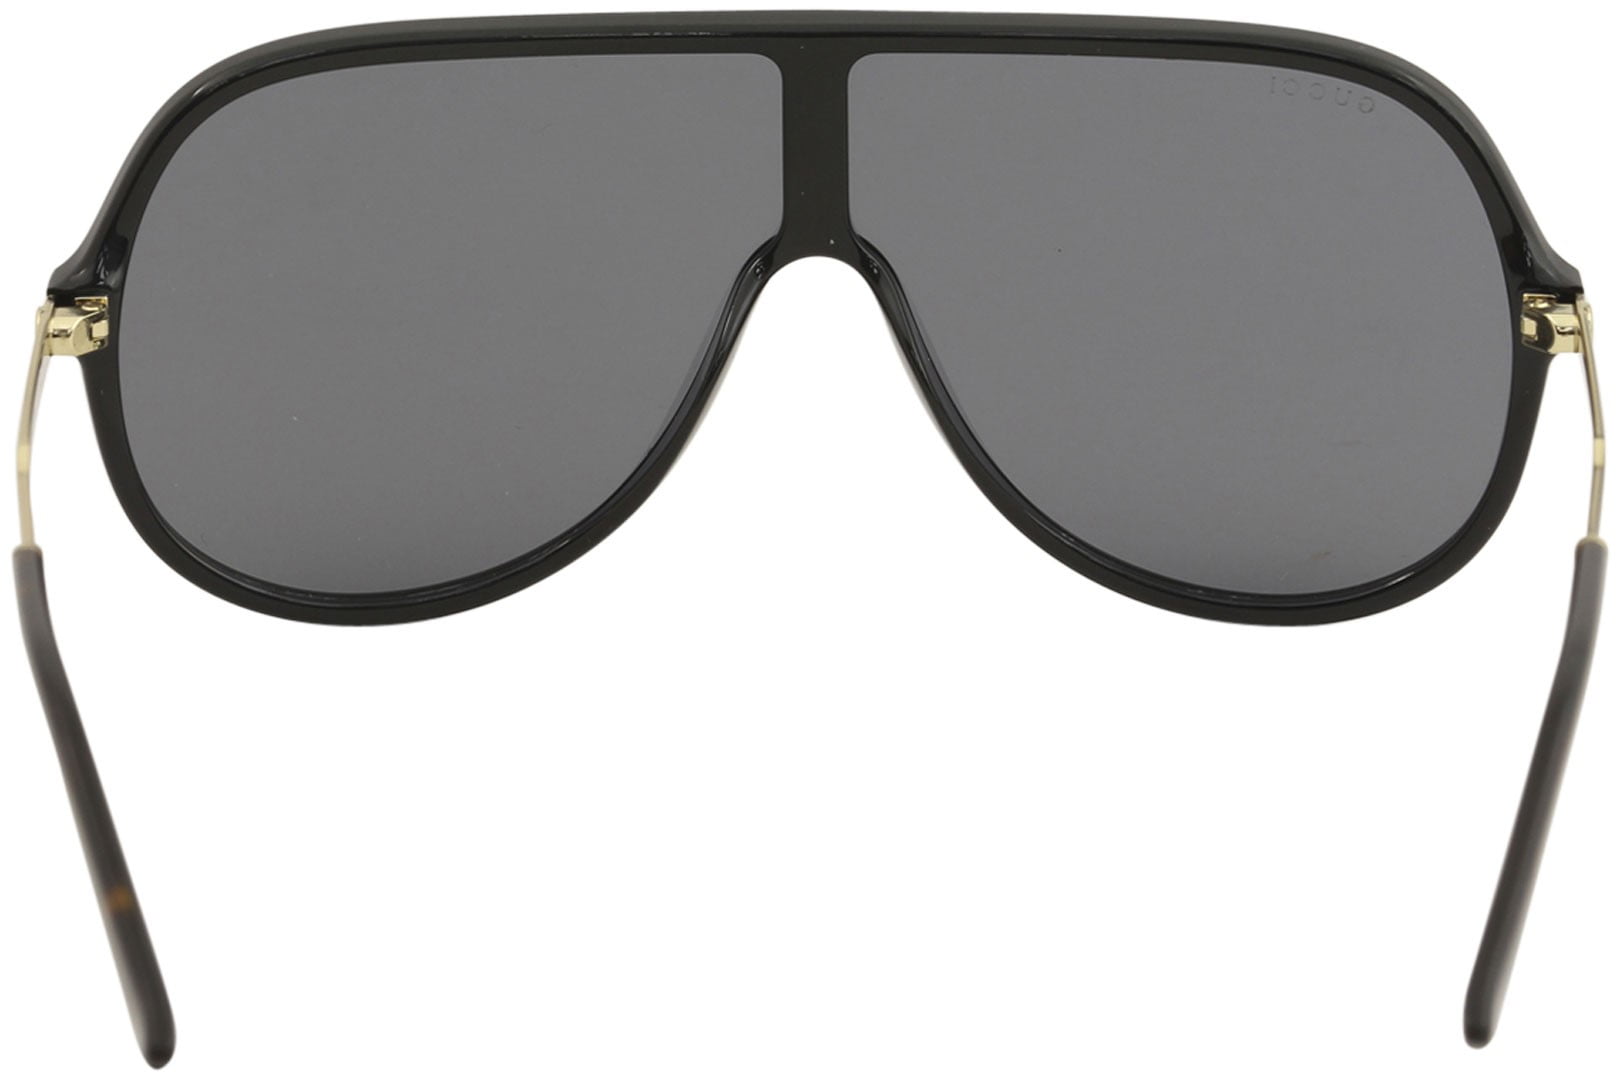 Gucci Black Shield Sunglasses Walmart.com